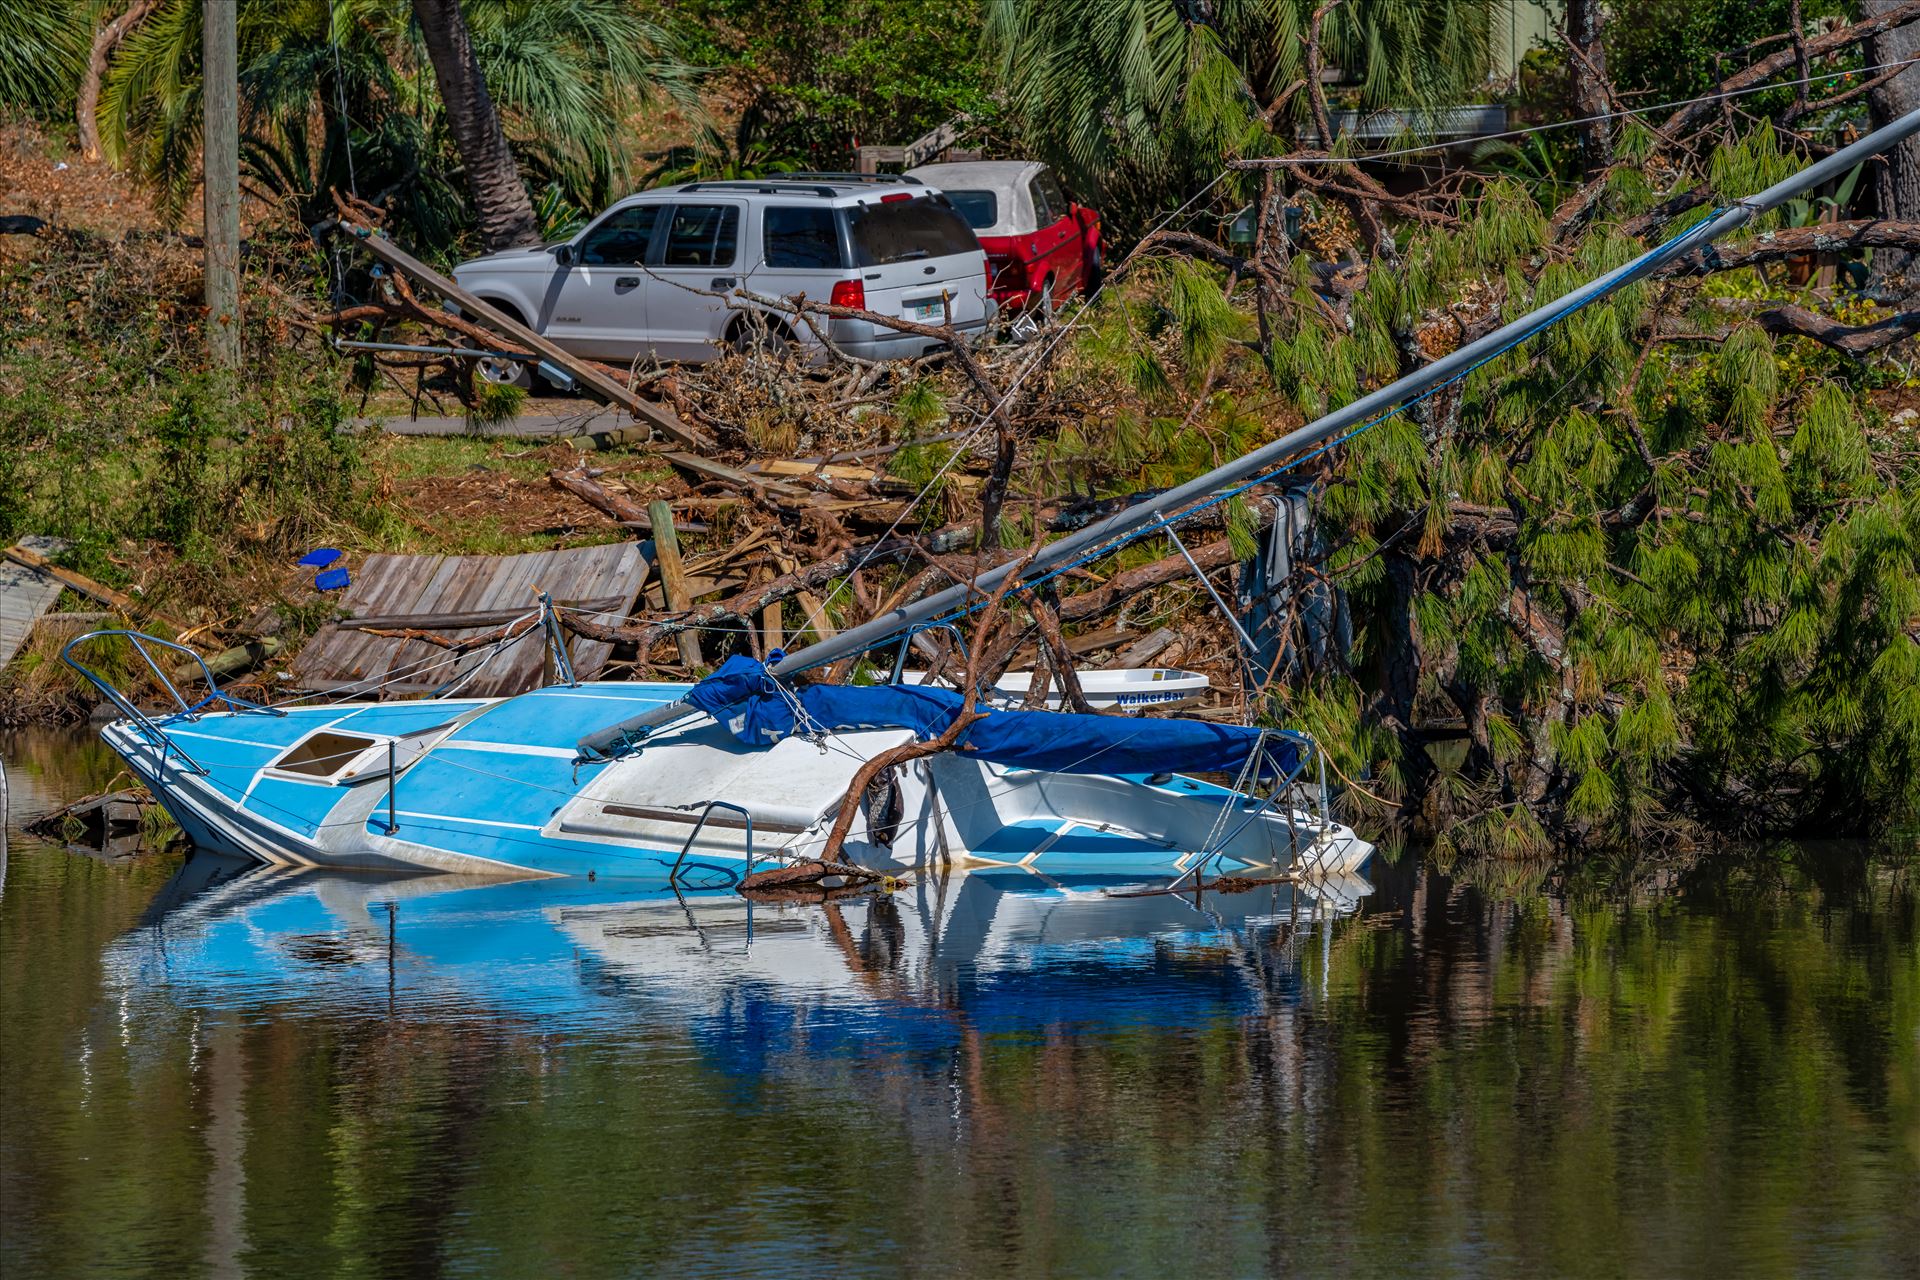 Hurricane Michael - Massalina bayou, Panama City, Florida. sunken sailboat from hurricane Michael by Terry Kelly Photography